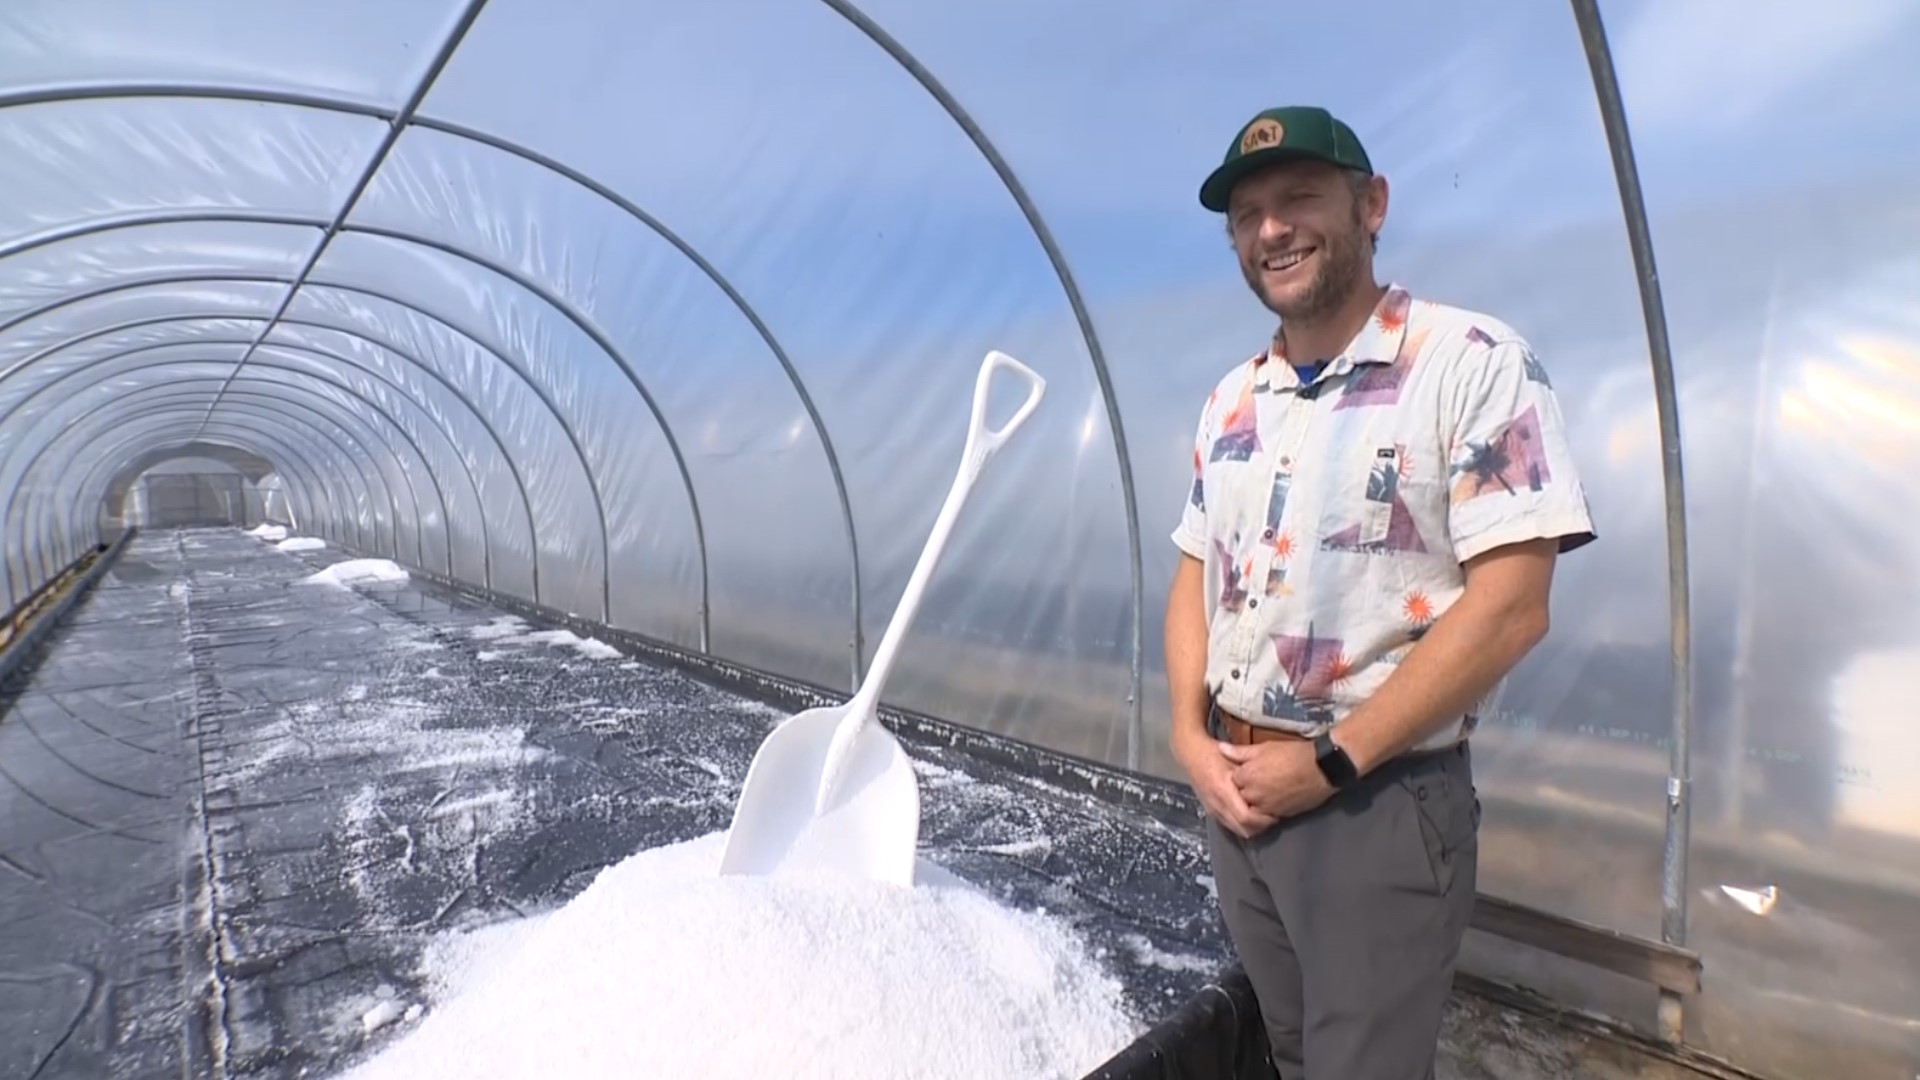 San Juan Island Sea Salt uses water from Puget Sound to make 40 different salt-inspired seasoning blends. #k5evening